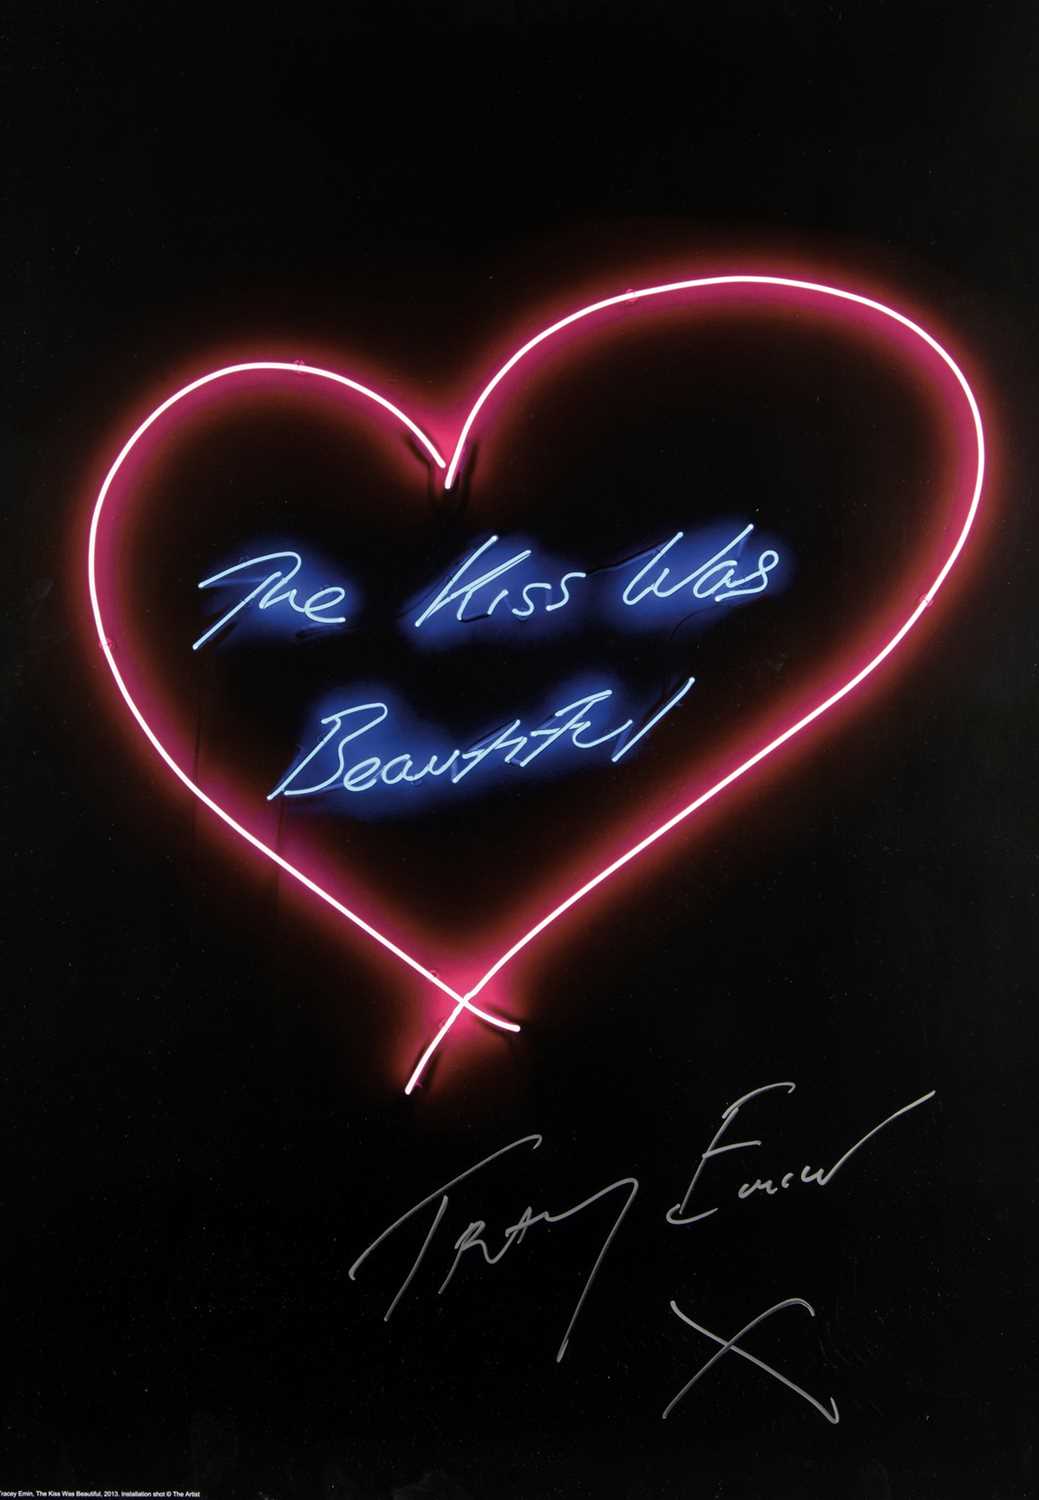 Lot 102 - Tracey Emin (British 1963-), 'The Kiss Was Beautiful’, 2016